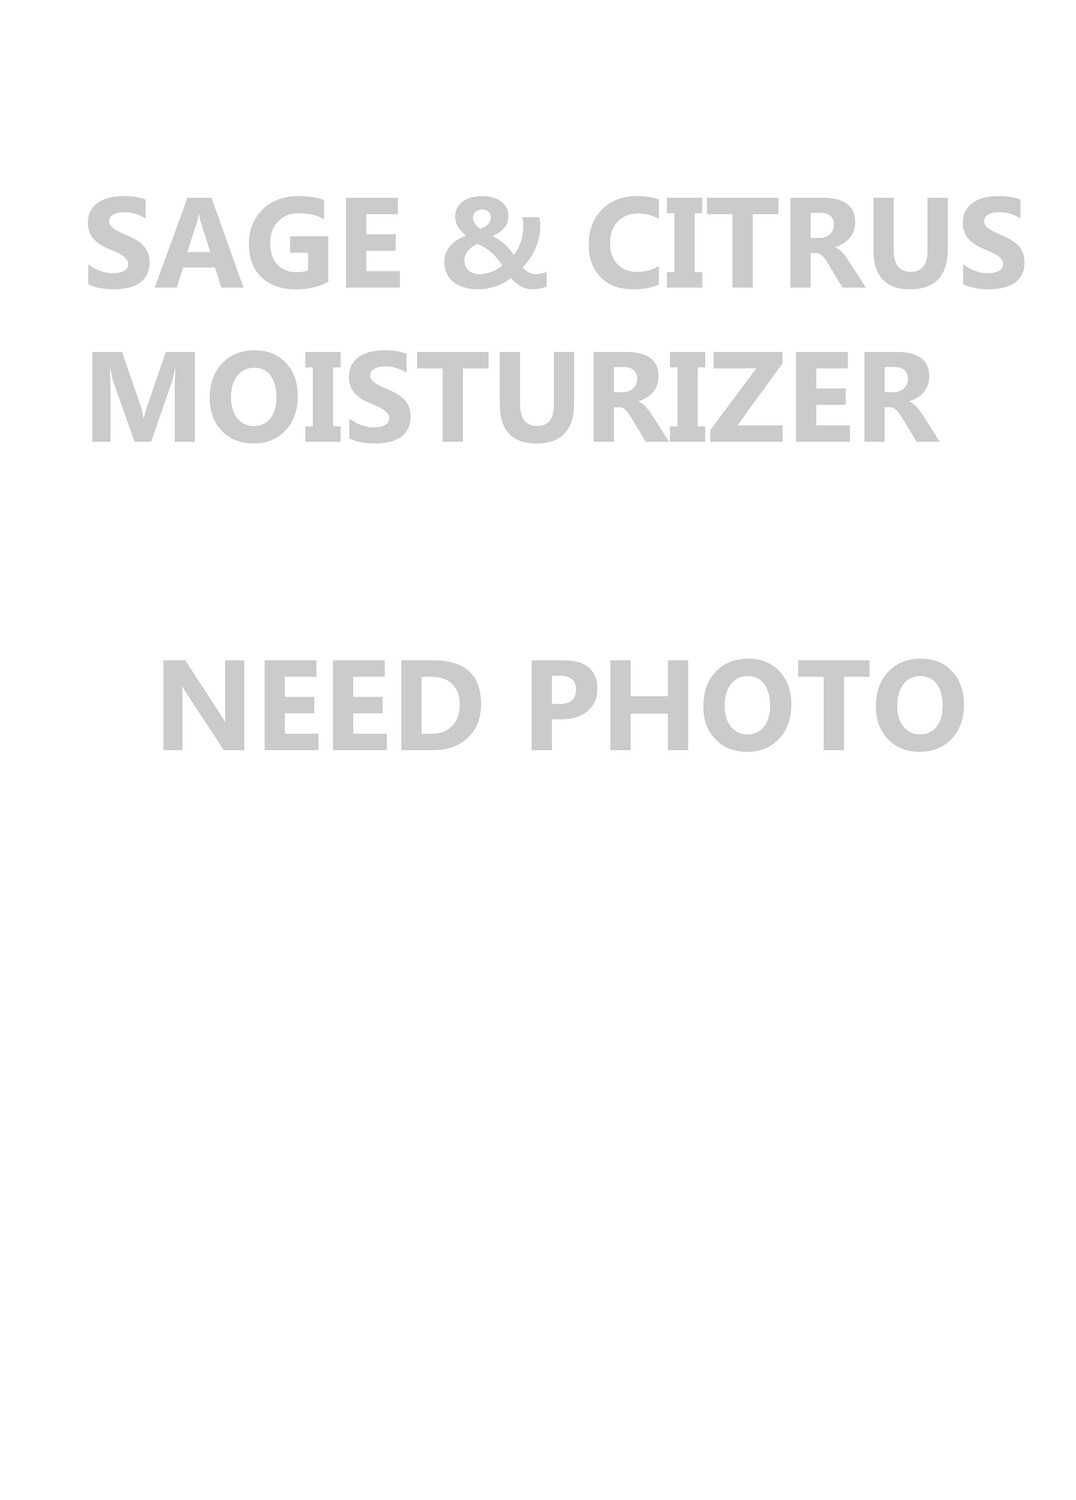 Sage & Citrus Moisturizer